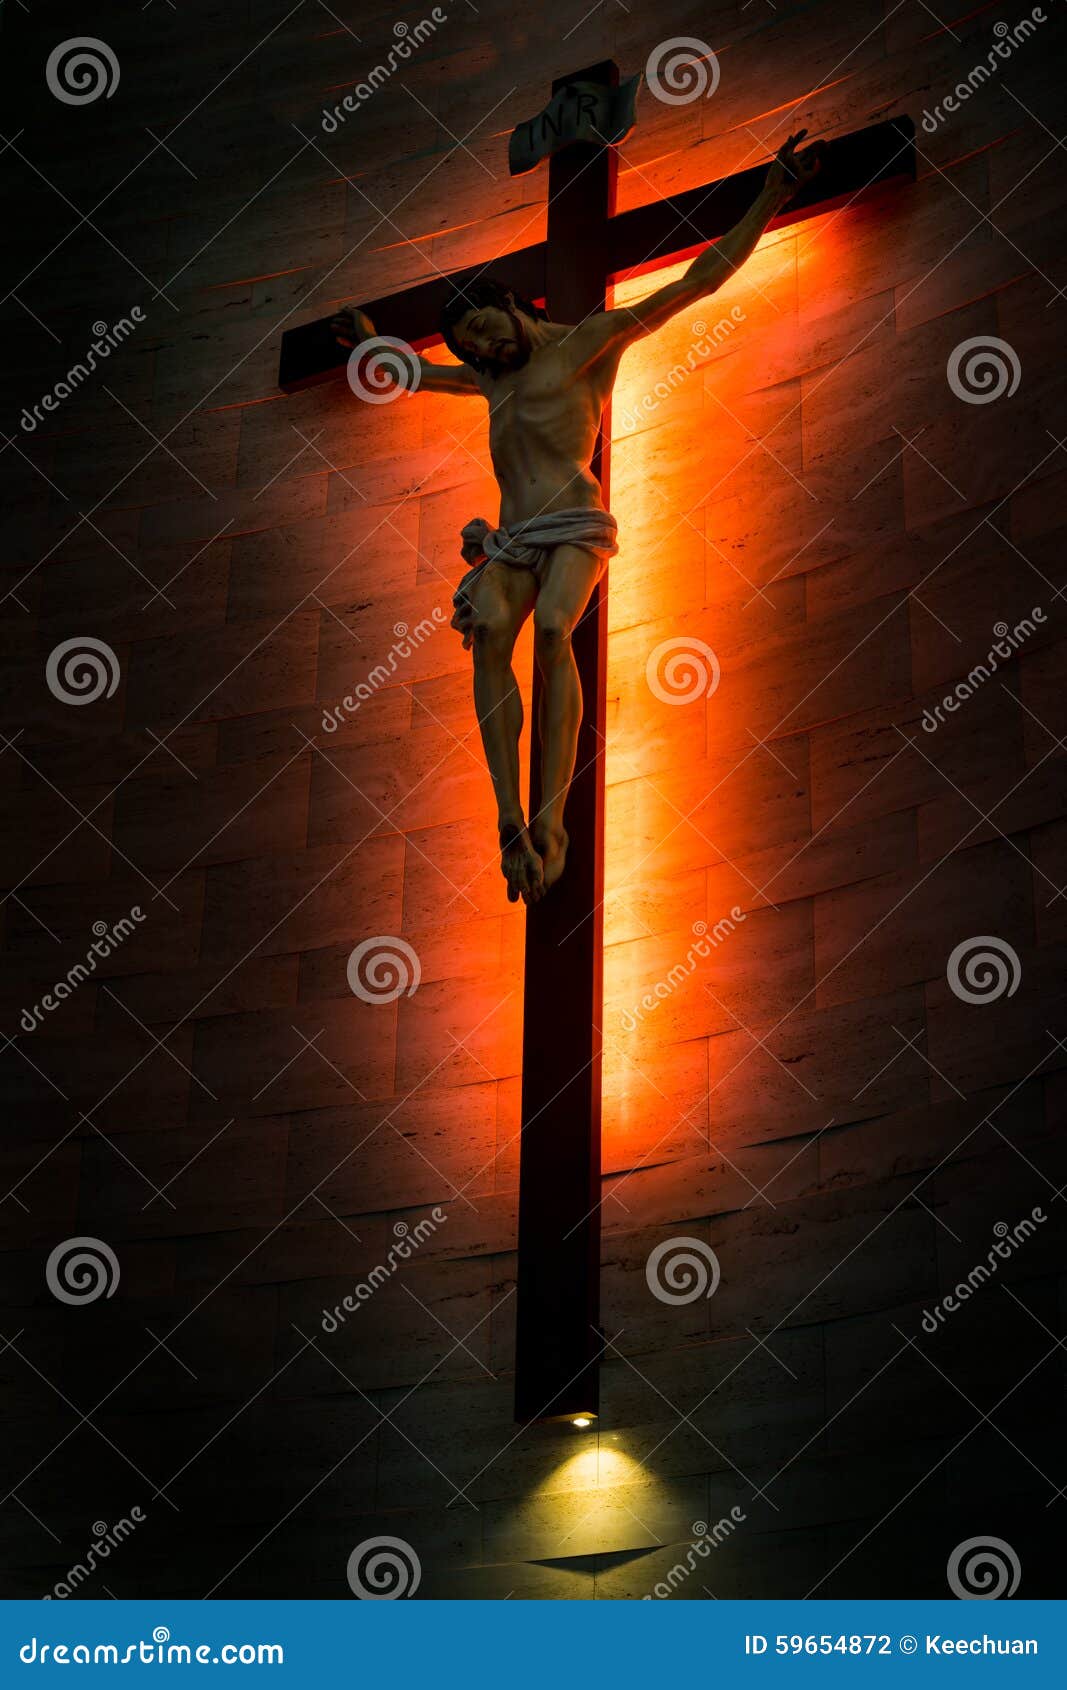 crucifix of the catholic christian faith in silhouette.